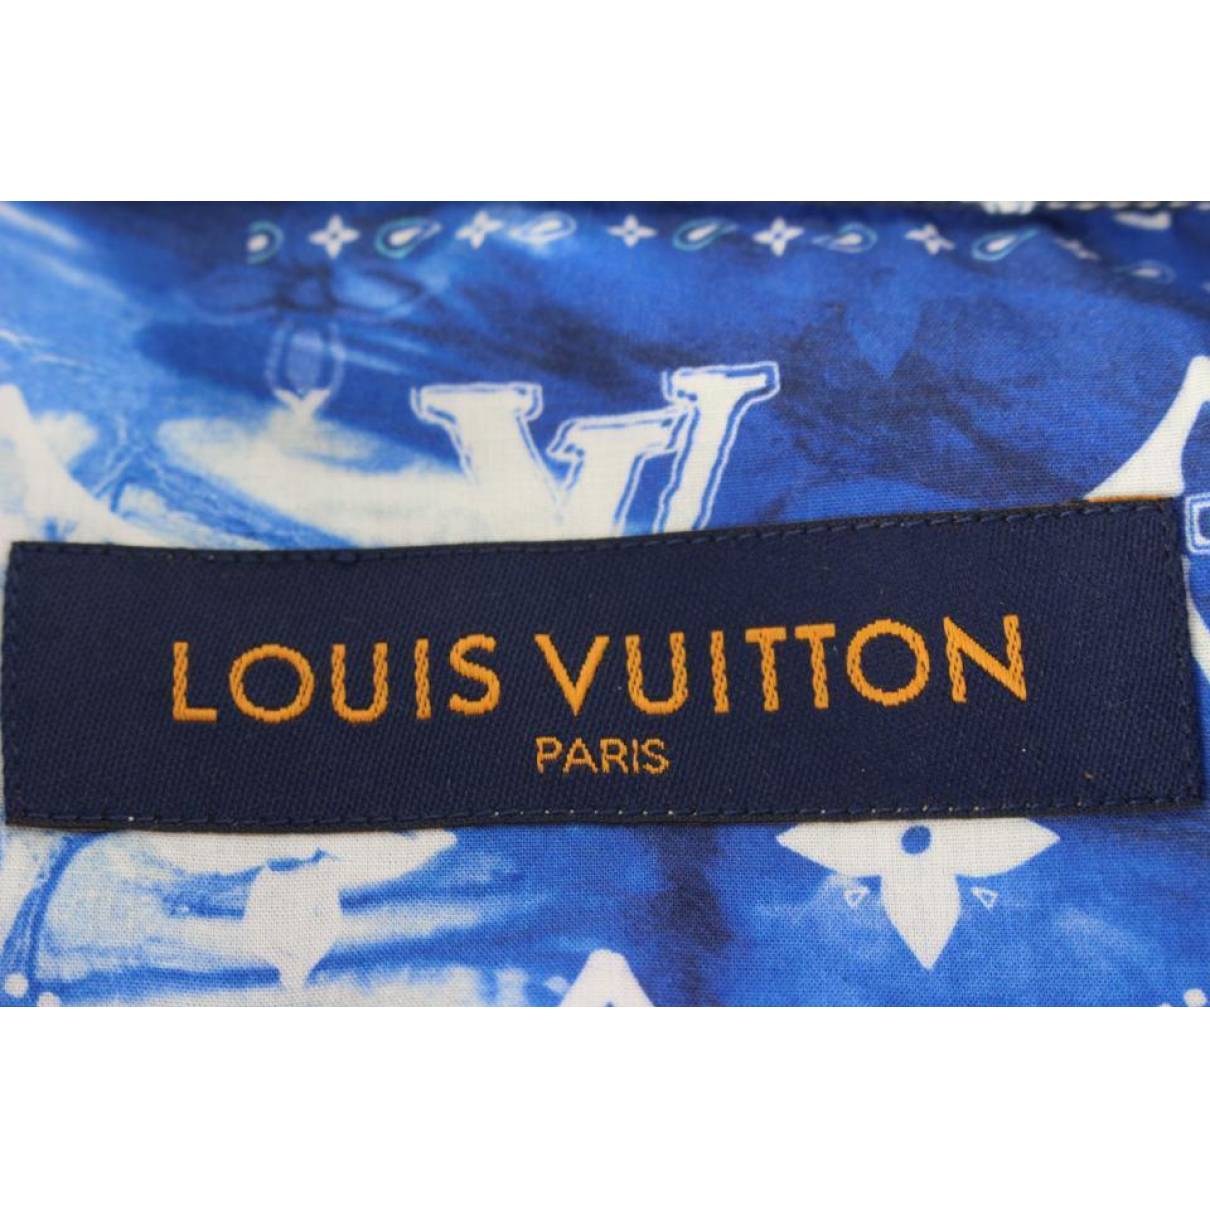 T-shirt Louis Vuitton Blue size M International in Cotton - 32410487